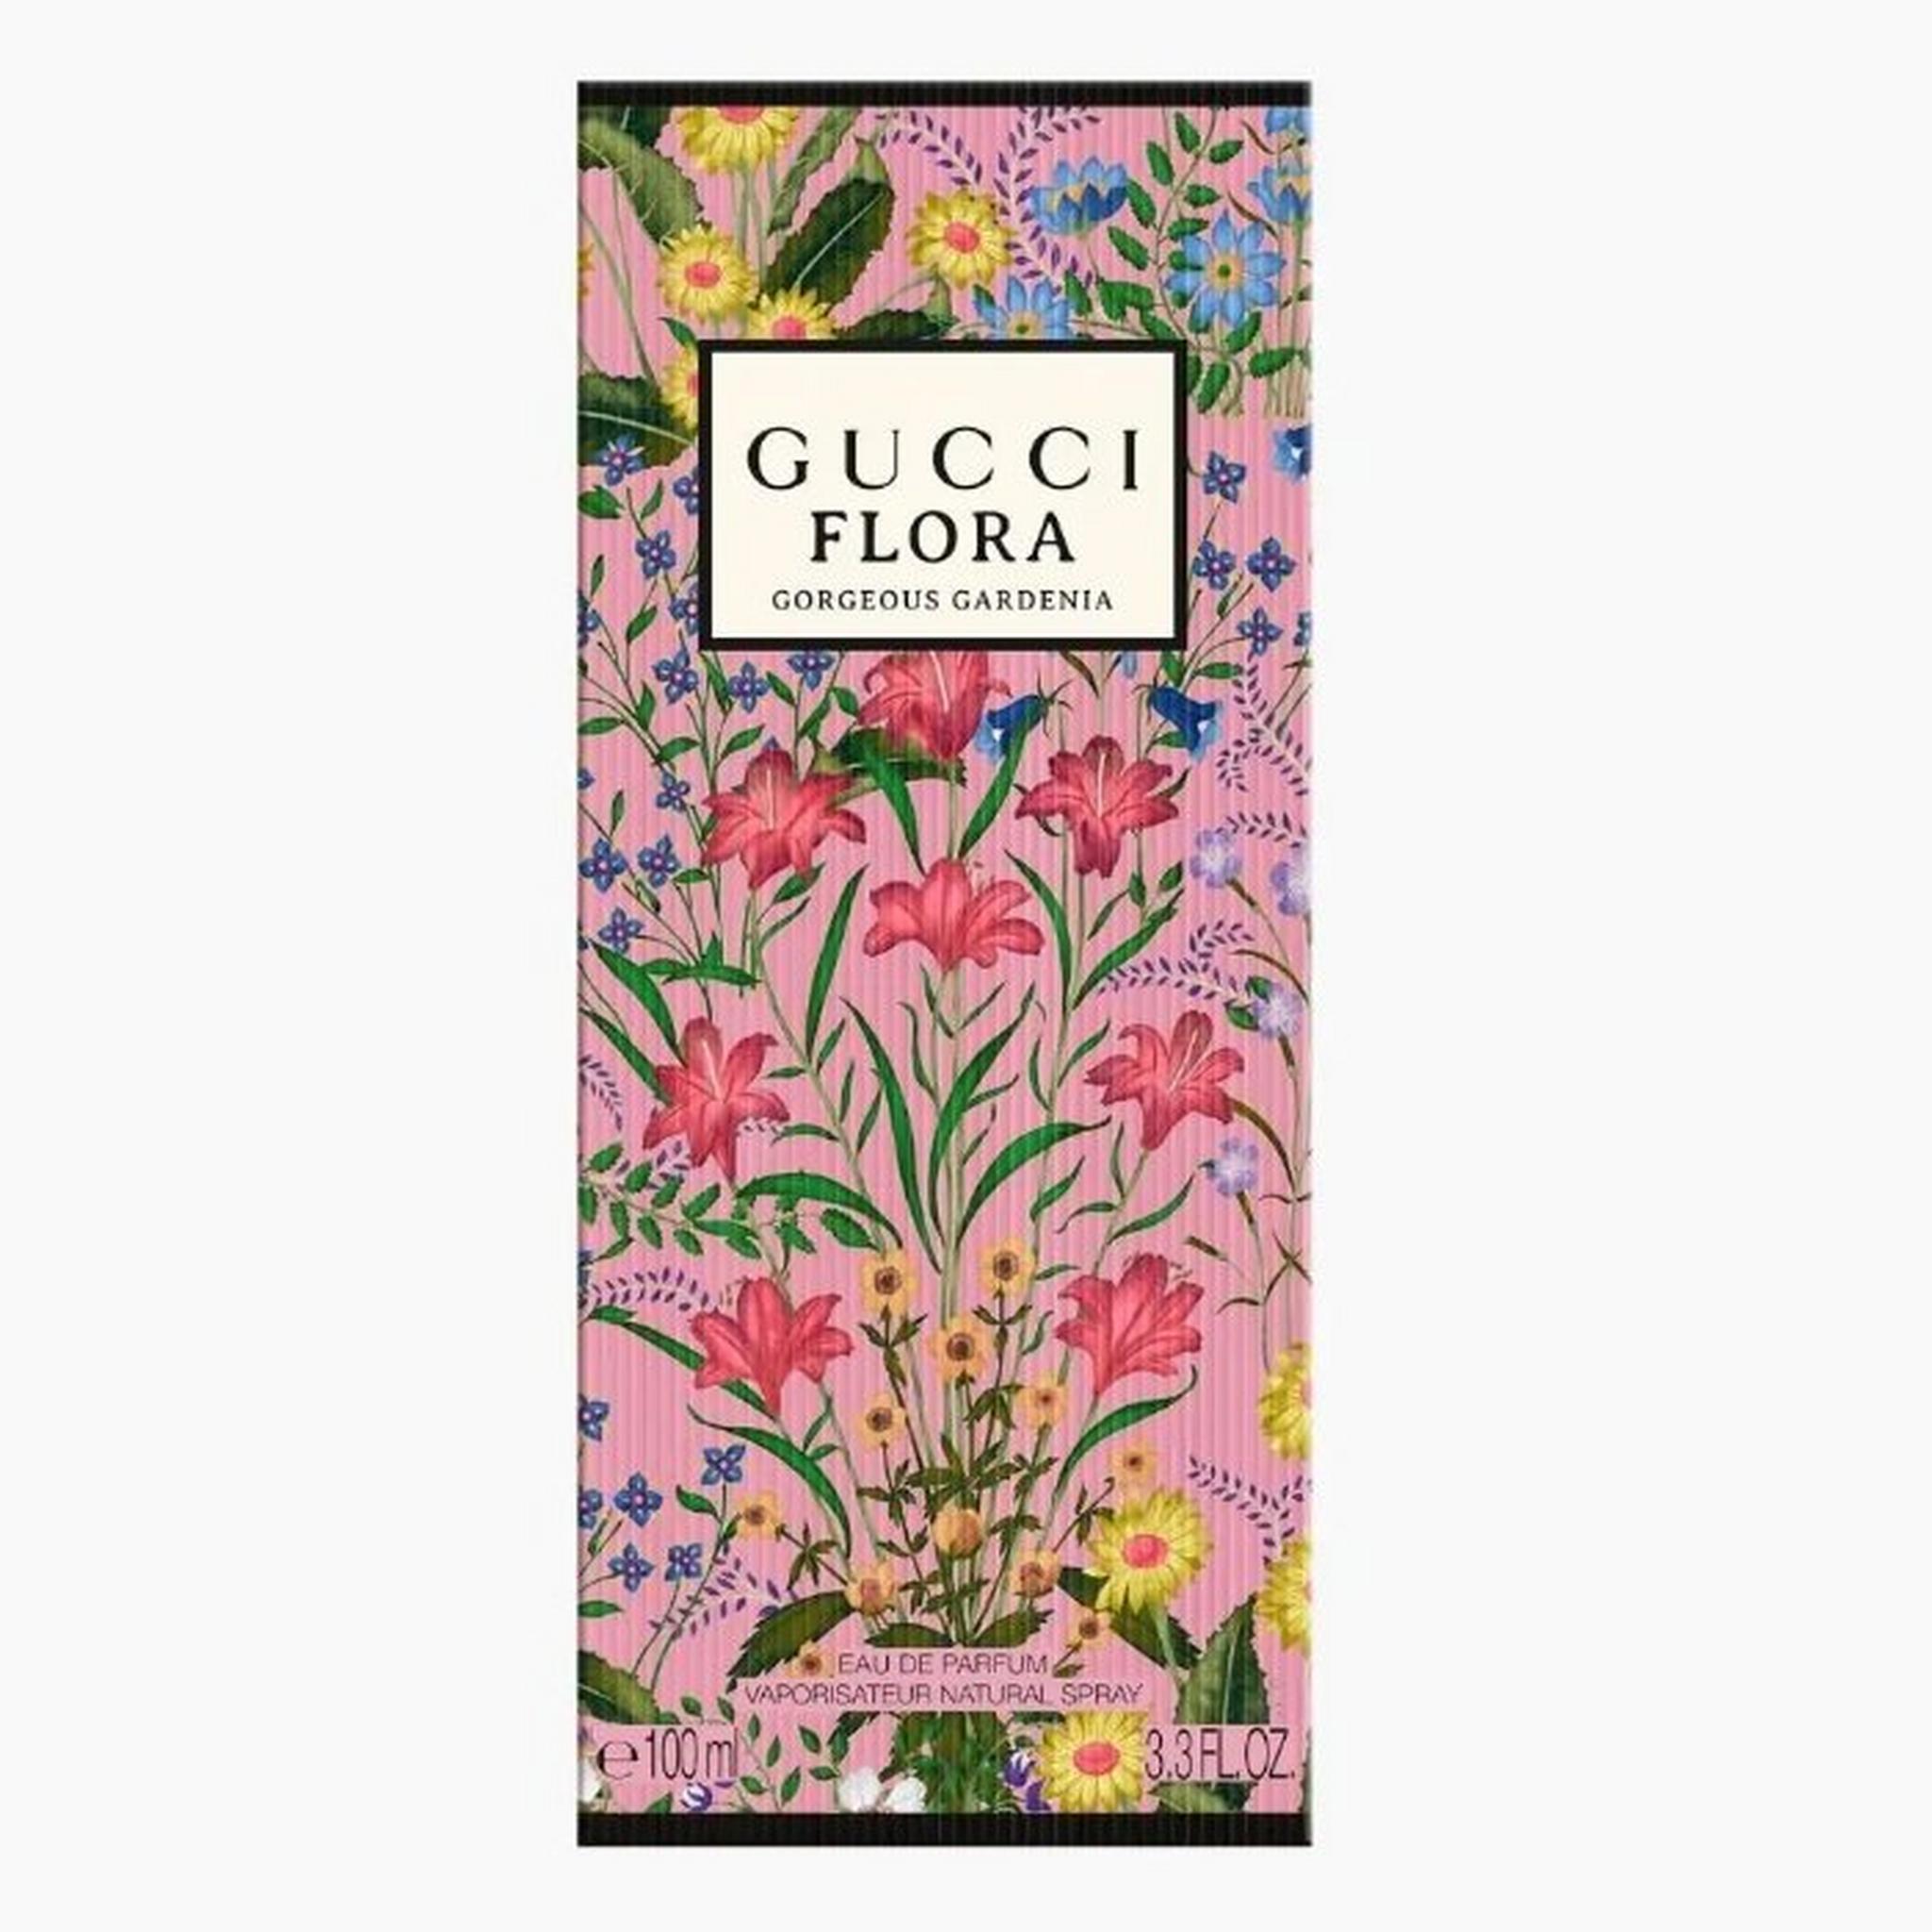 Gucci Flora Gorgeous Gardenia For Women - Eau De Perfume, 100ml